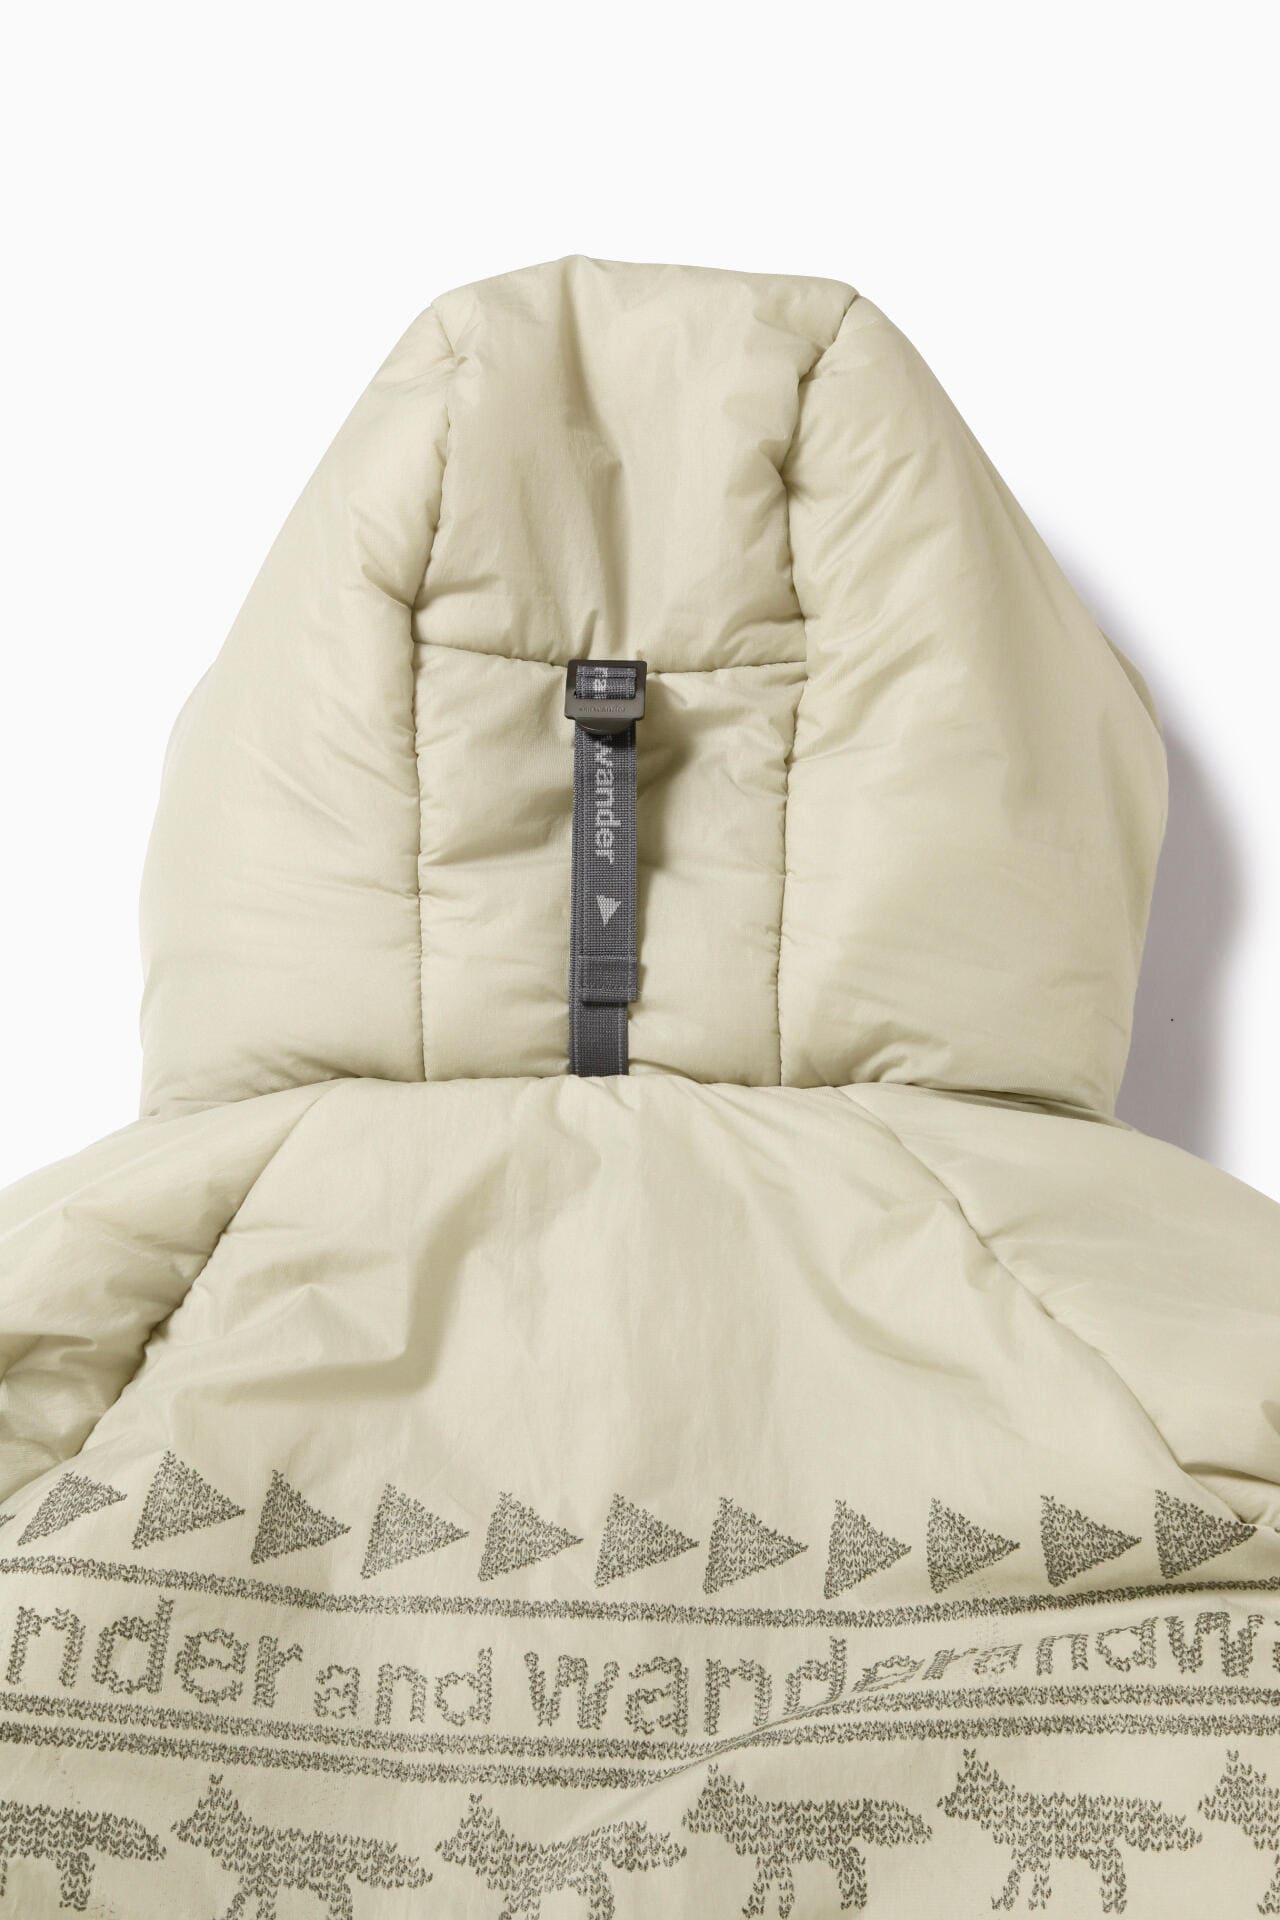 MAISON KITSUNÉ × and wander nordic border insulation jacket 